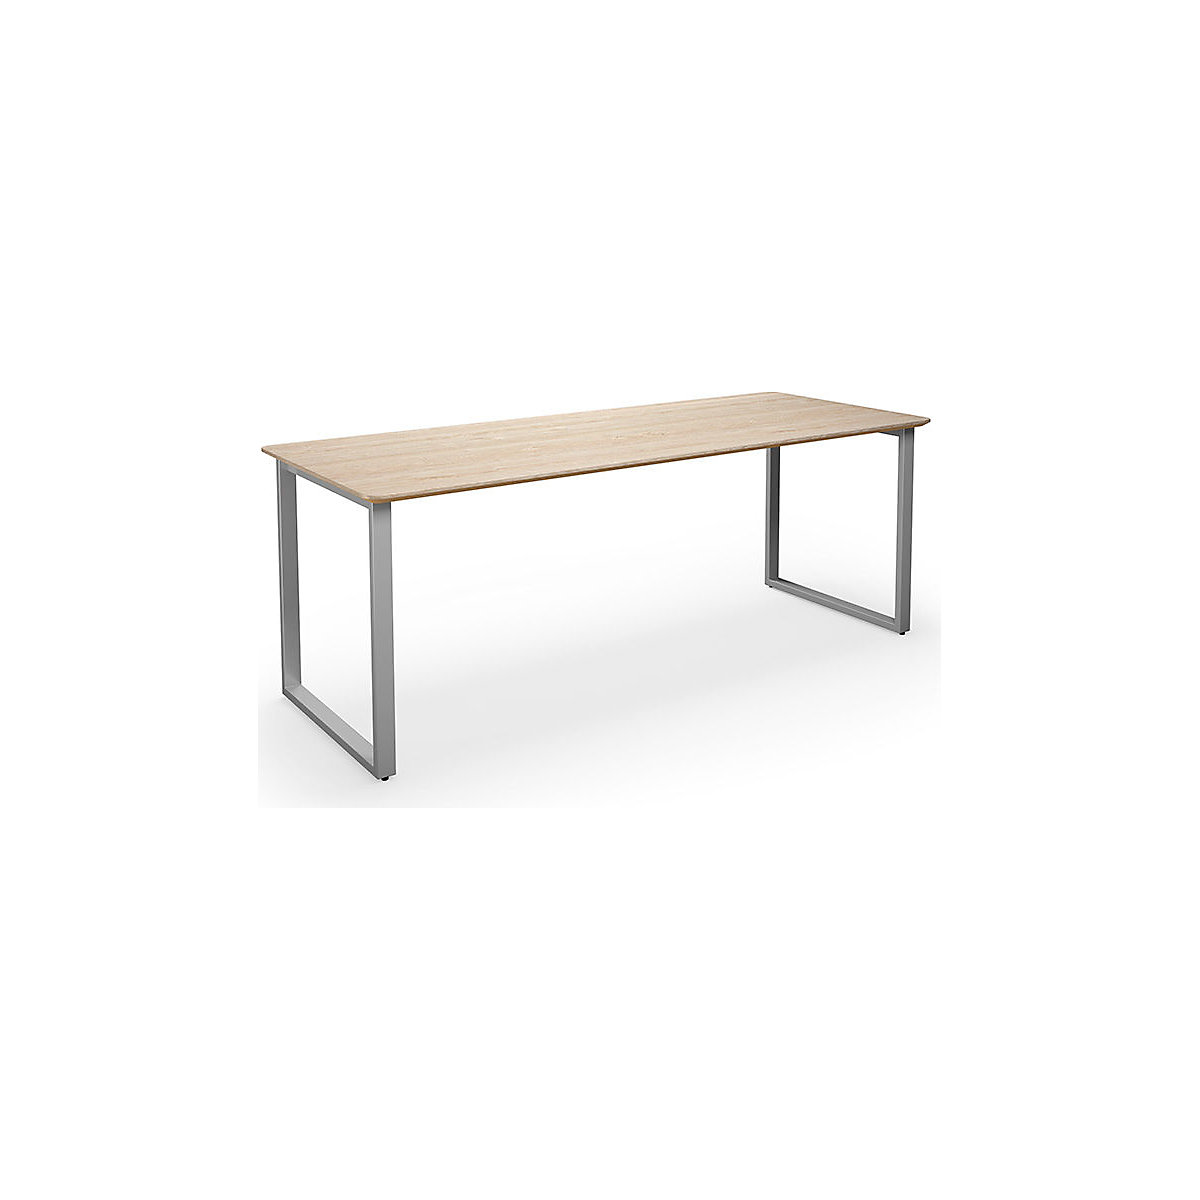 DUO-O Trend multi-purpose desk, straight tabletop, rounded corners, WxD 1800 x 800 mm, oak, silver-3